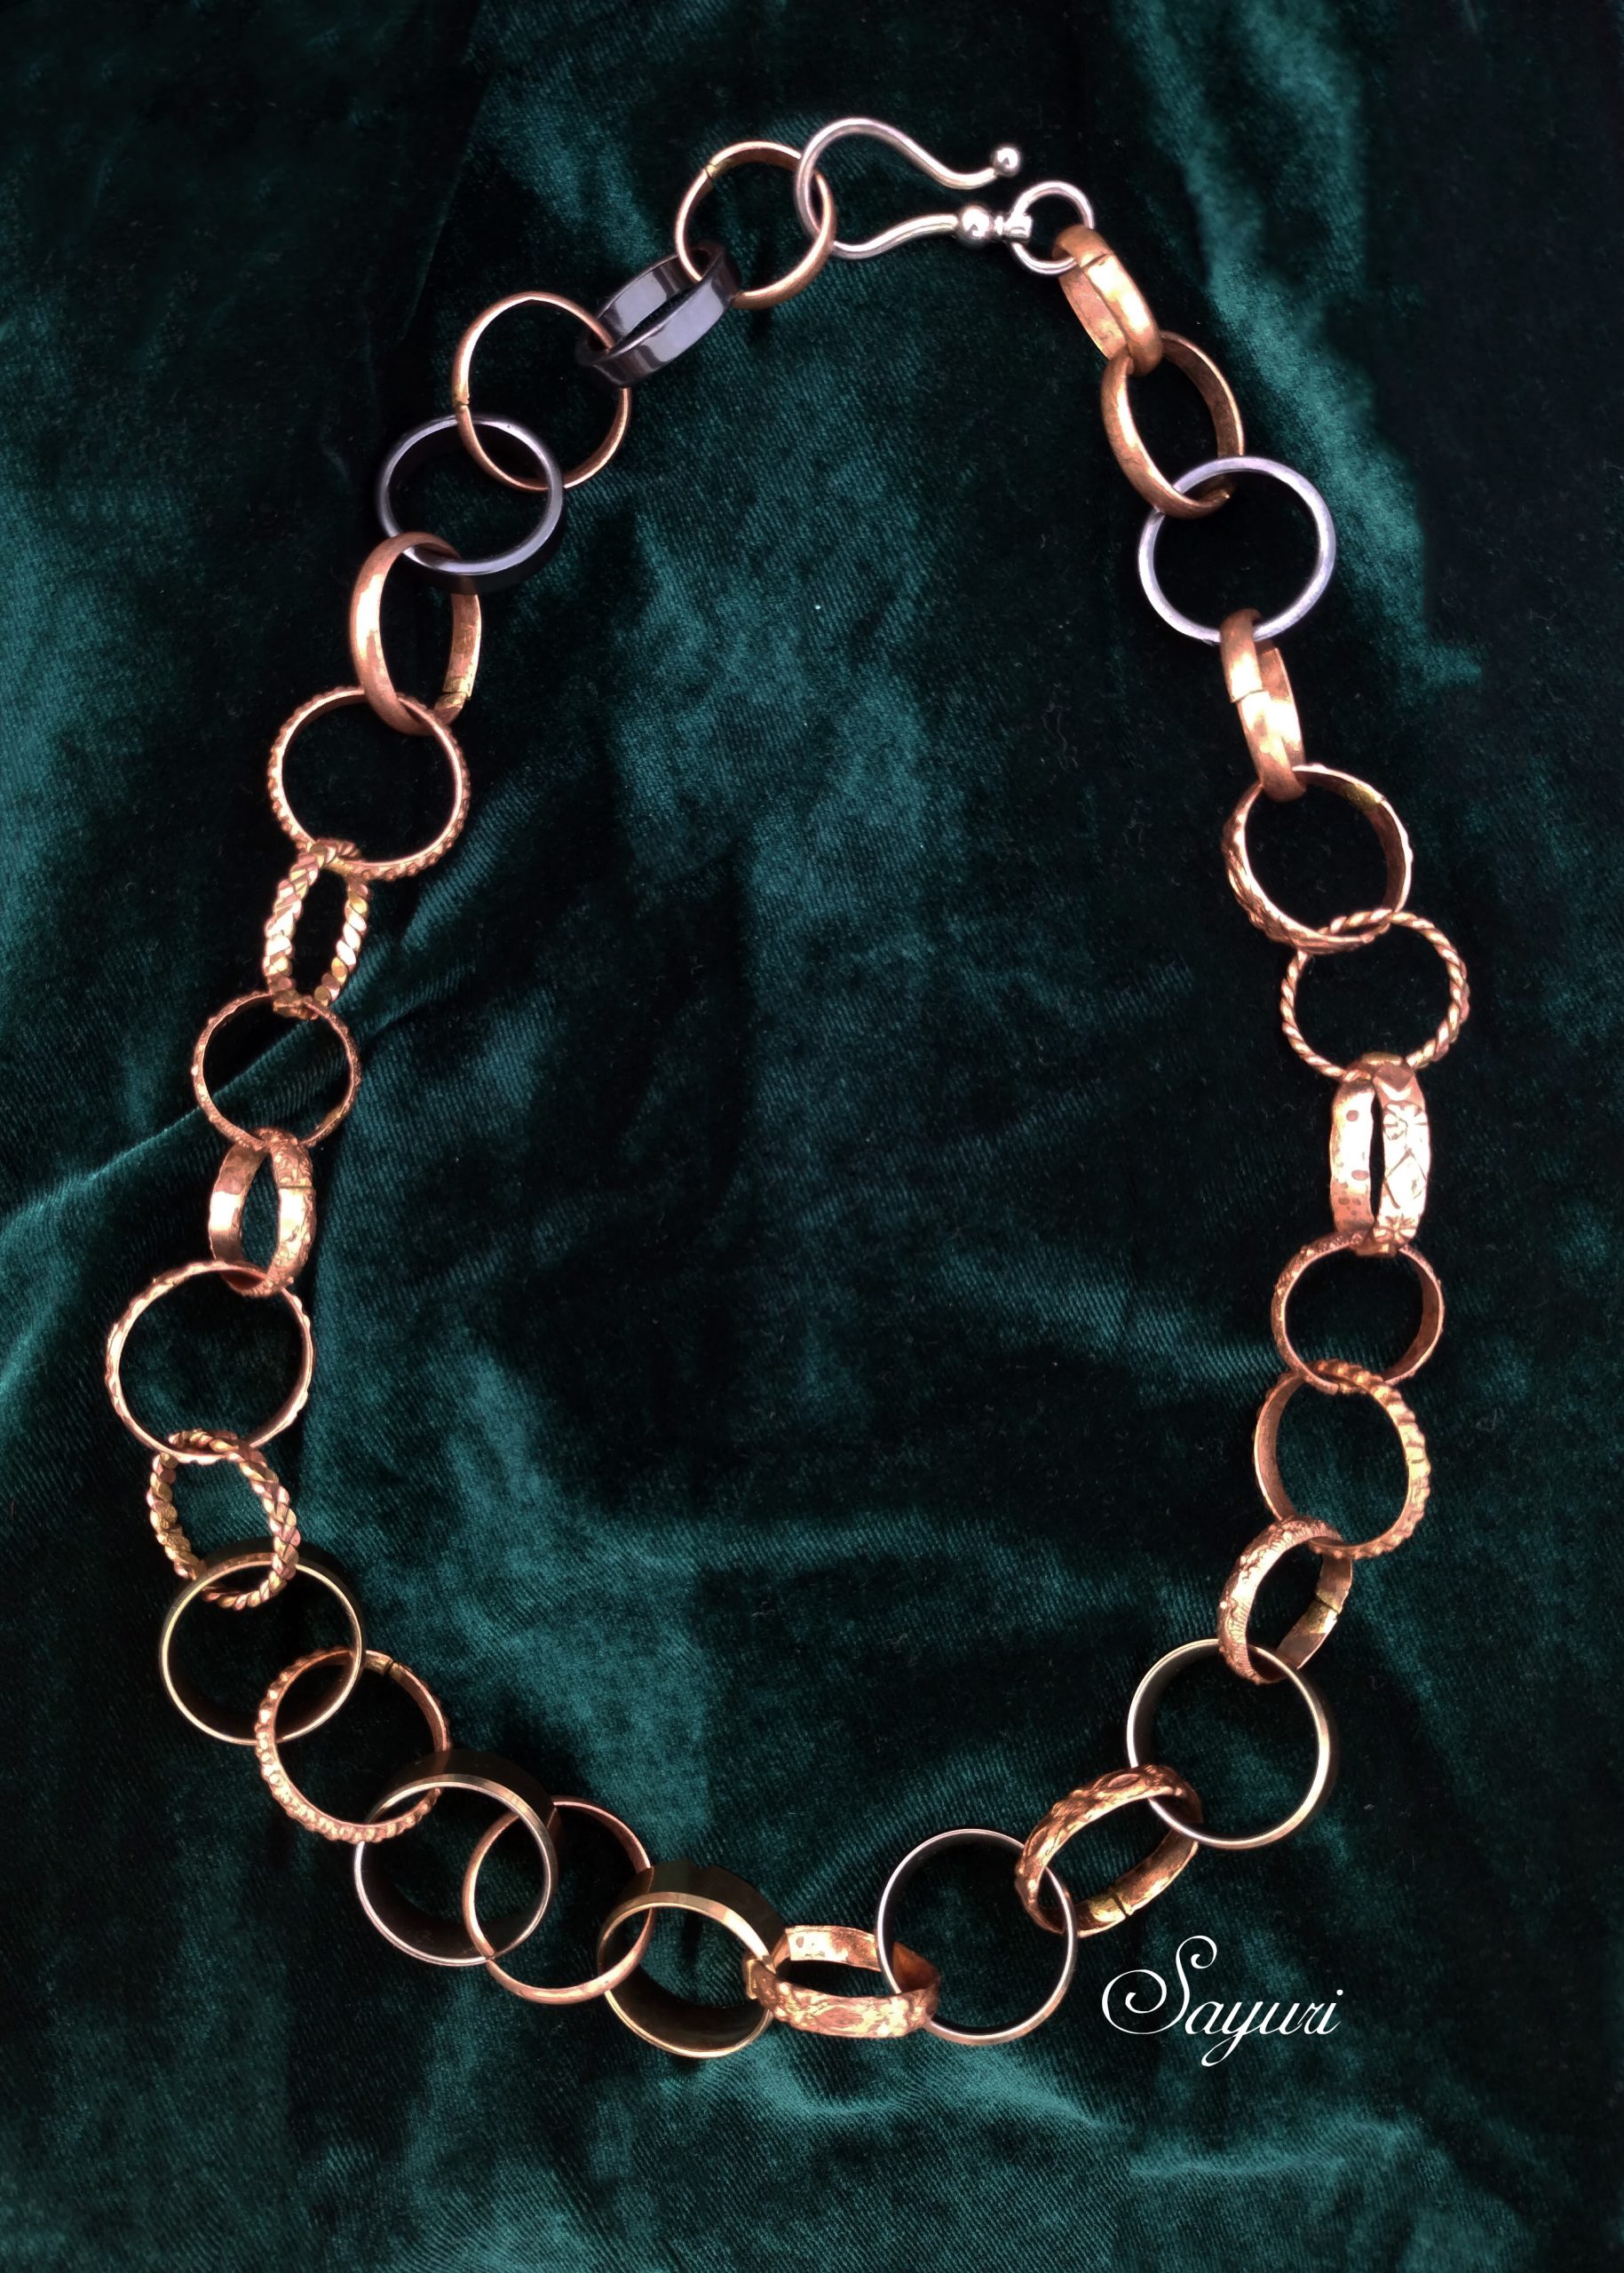 DIY chain necklace using finger rings - Sayuri